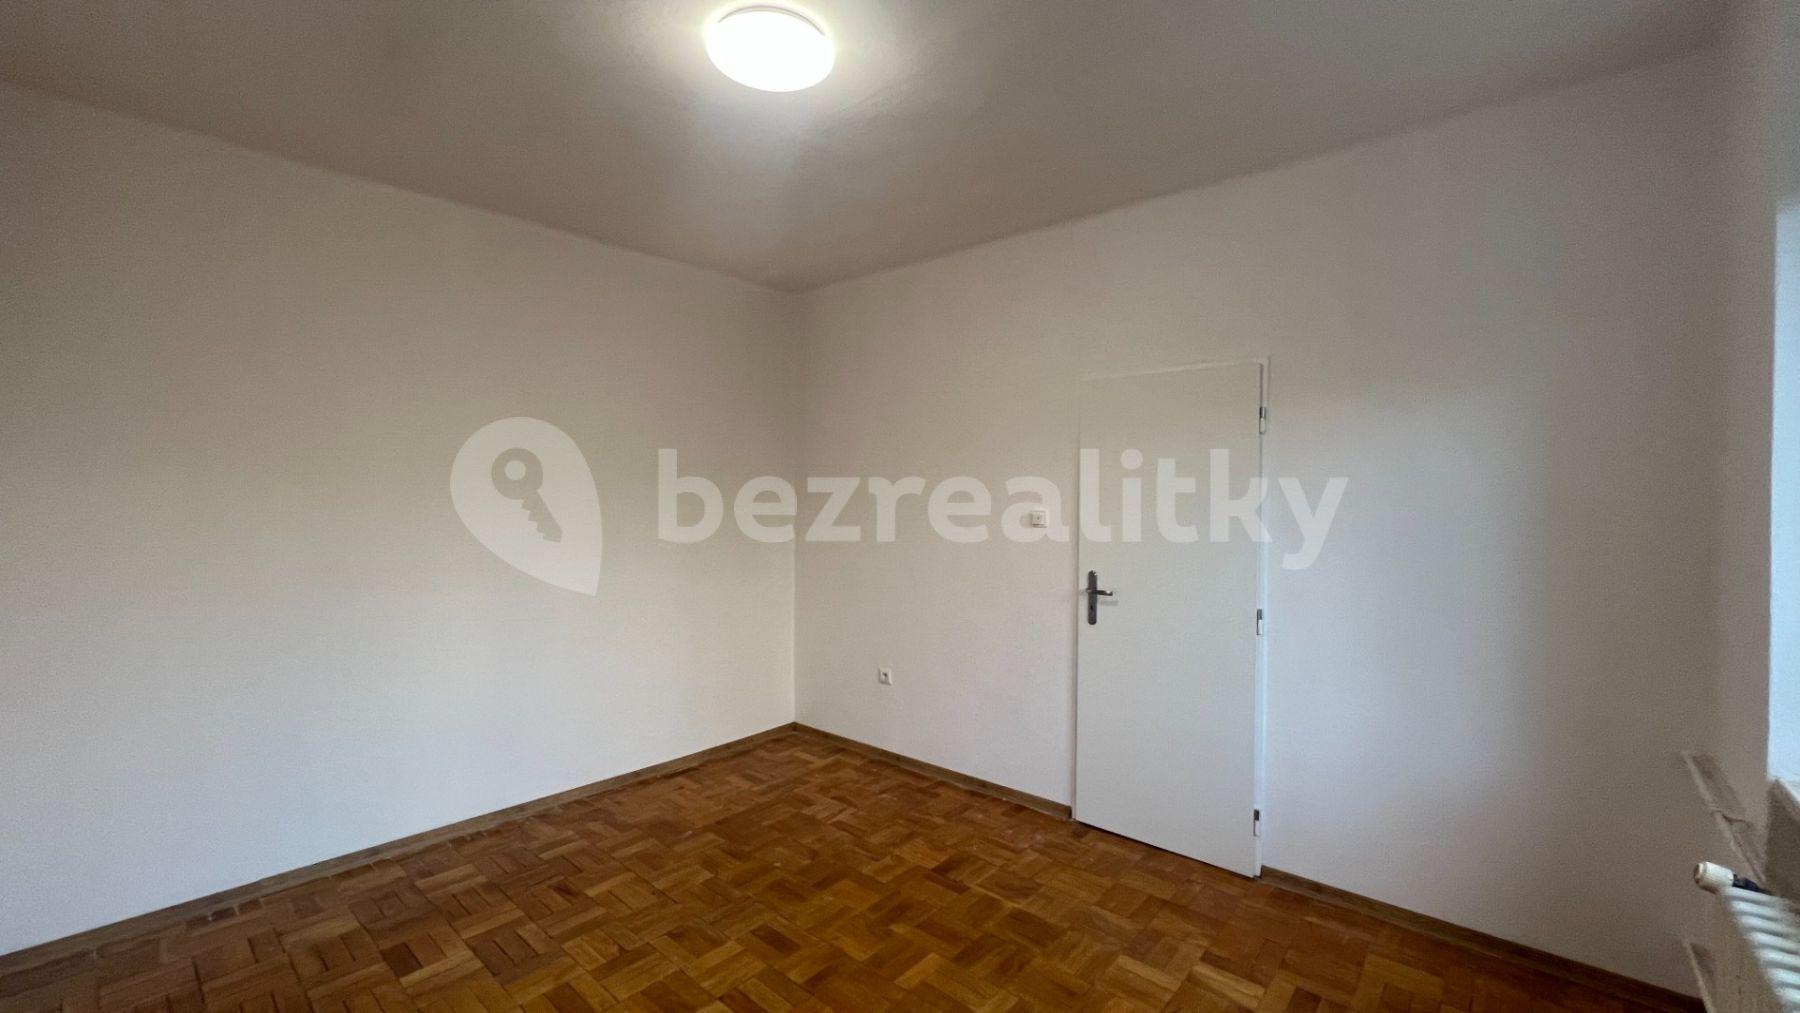 1 bedroom flat to rent, 30 m², Masarykova, Ústí nad Labem, Ústecký Region